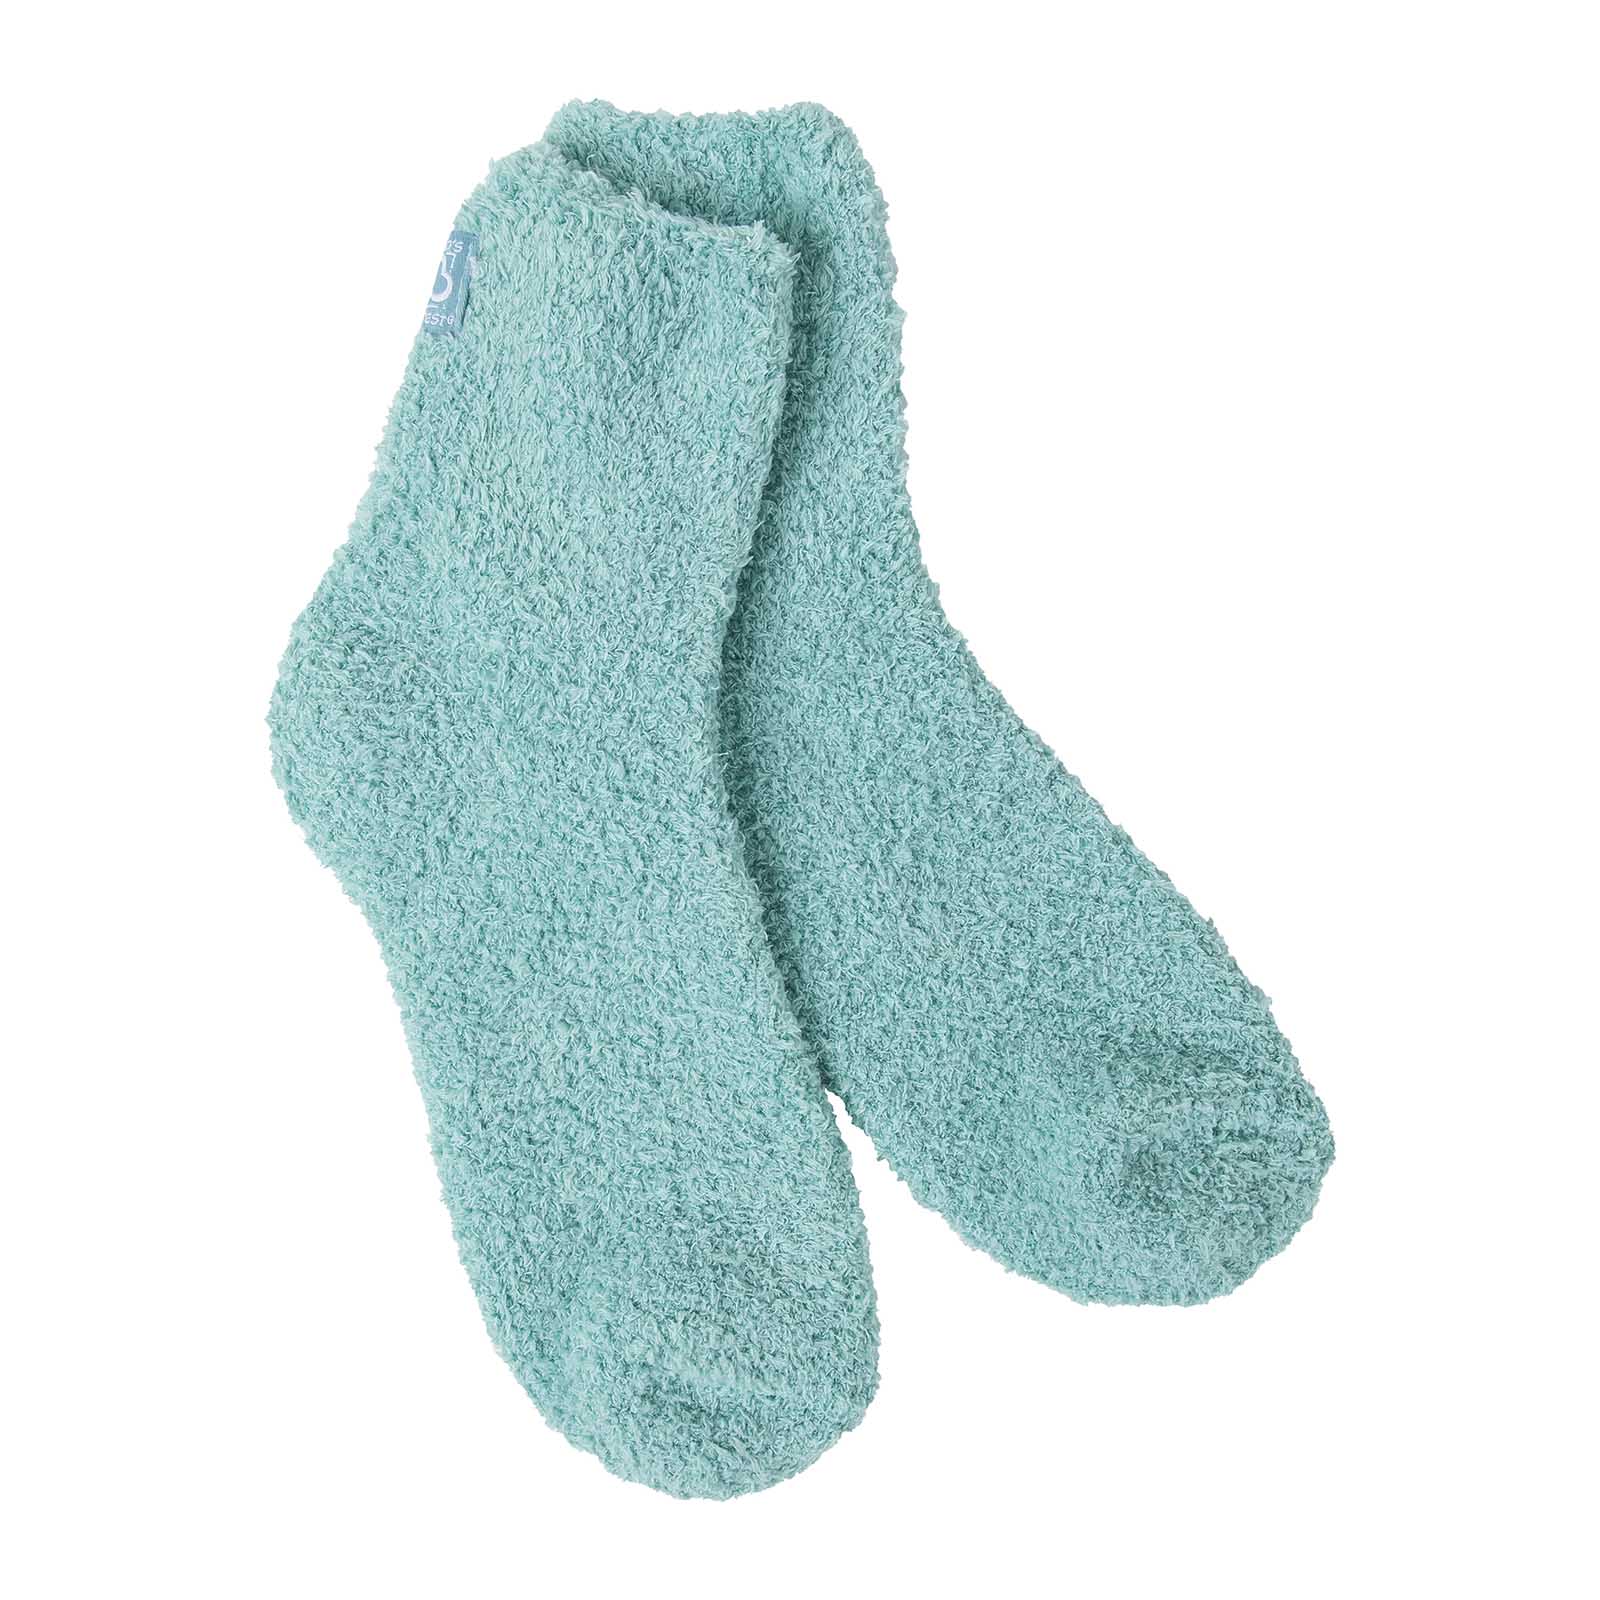 Guide Gear Women's Cozy Gripper Socks, 3 Pairs - 612777, Socks at